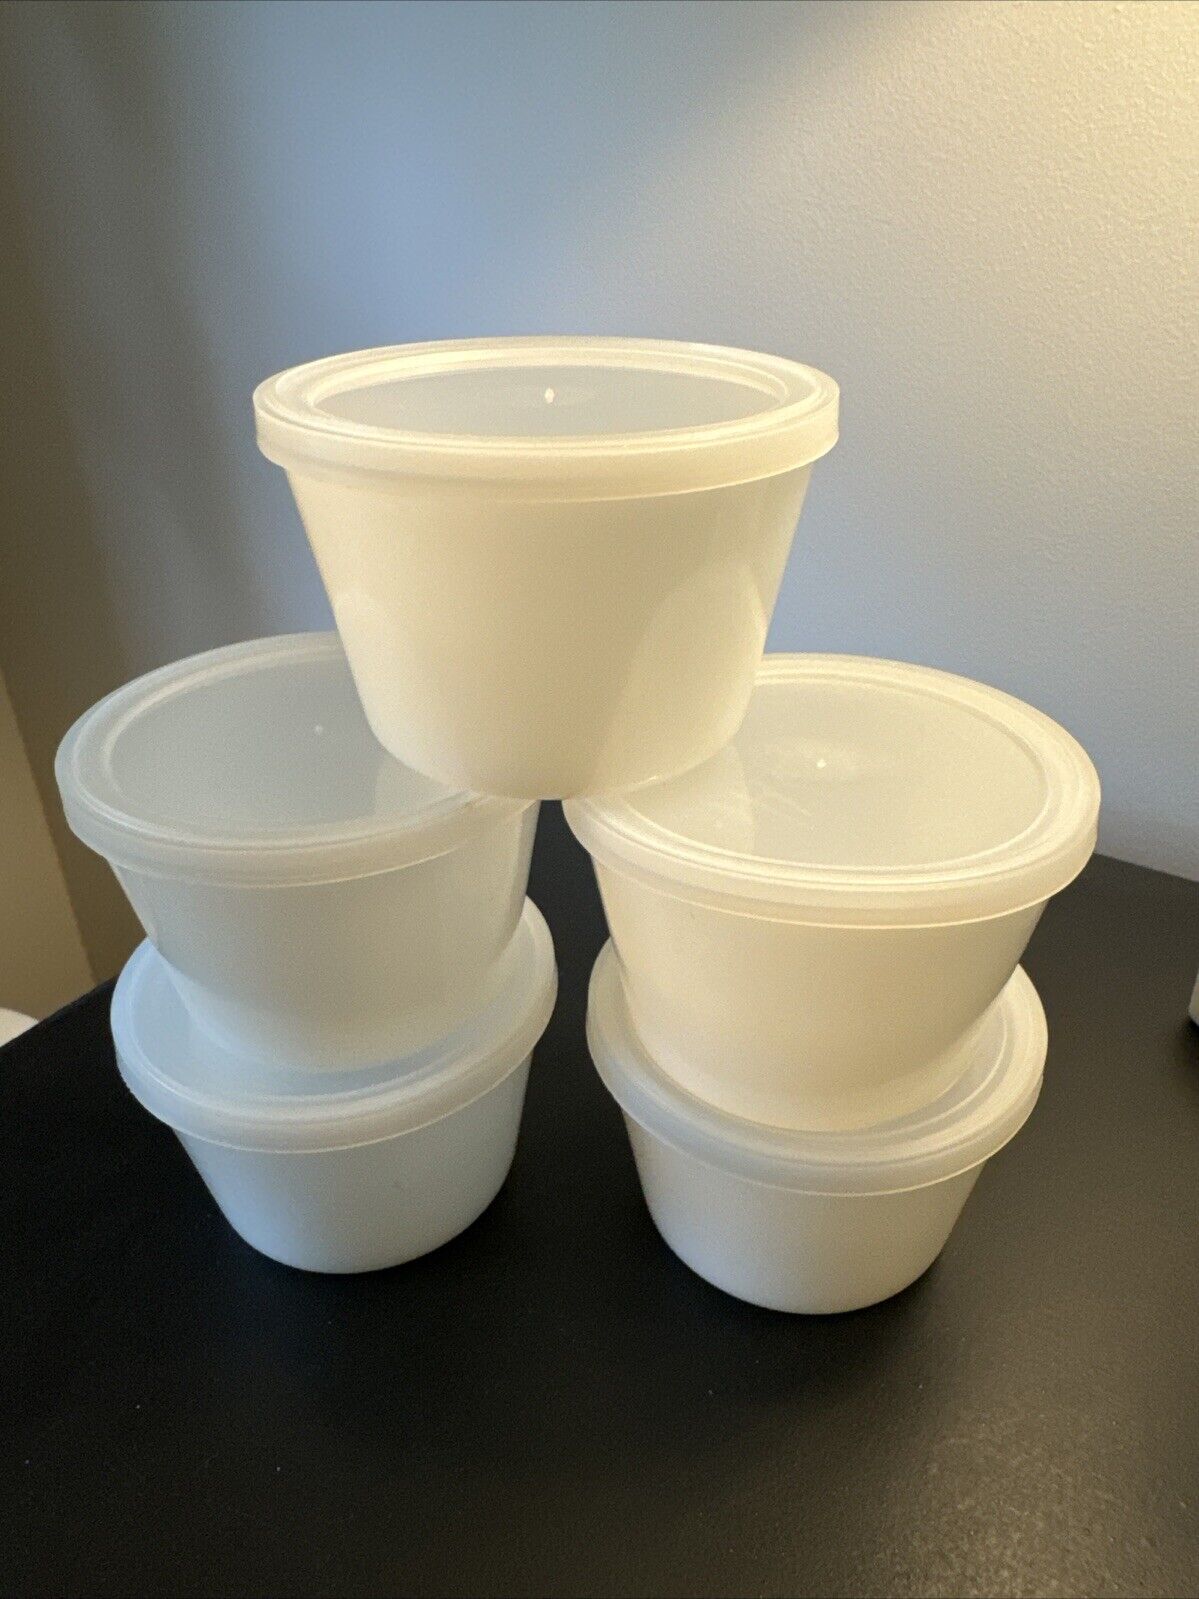 Retro Glassbake Milk Glass Custard Ramekin Baking Cups With Lids. Lot # 5 VTG